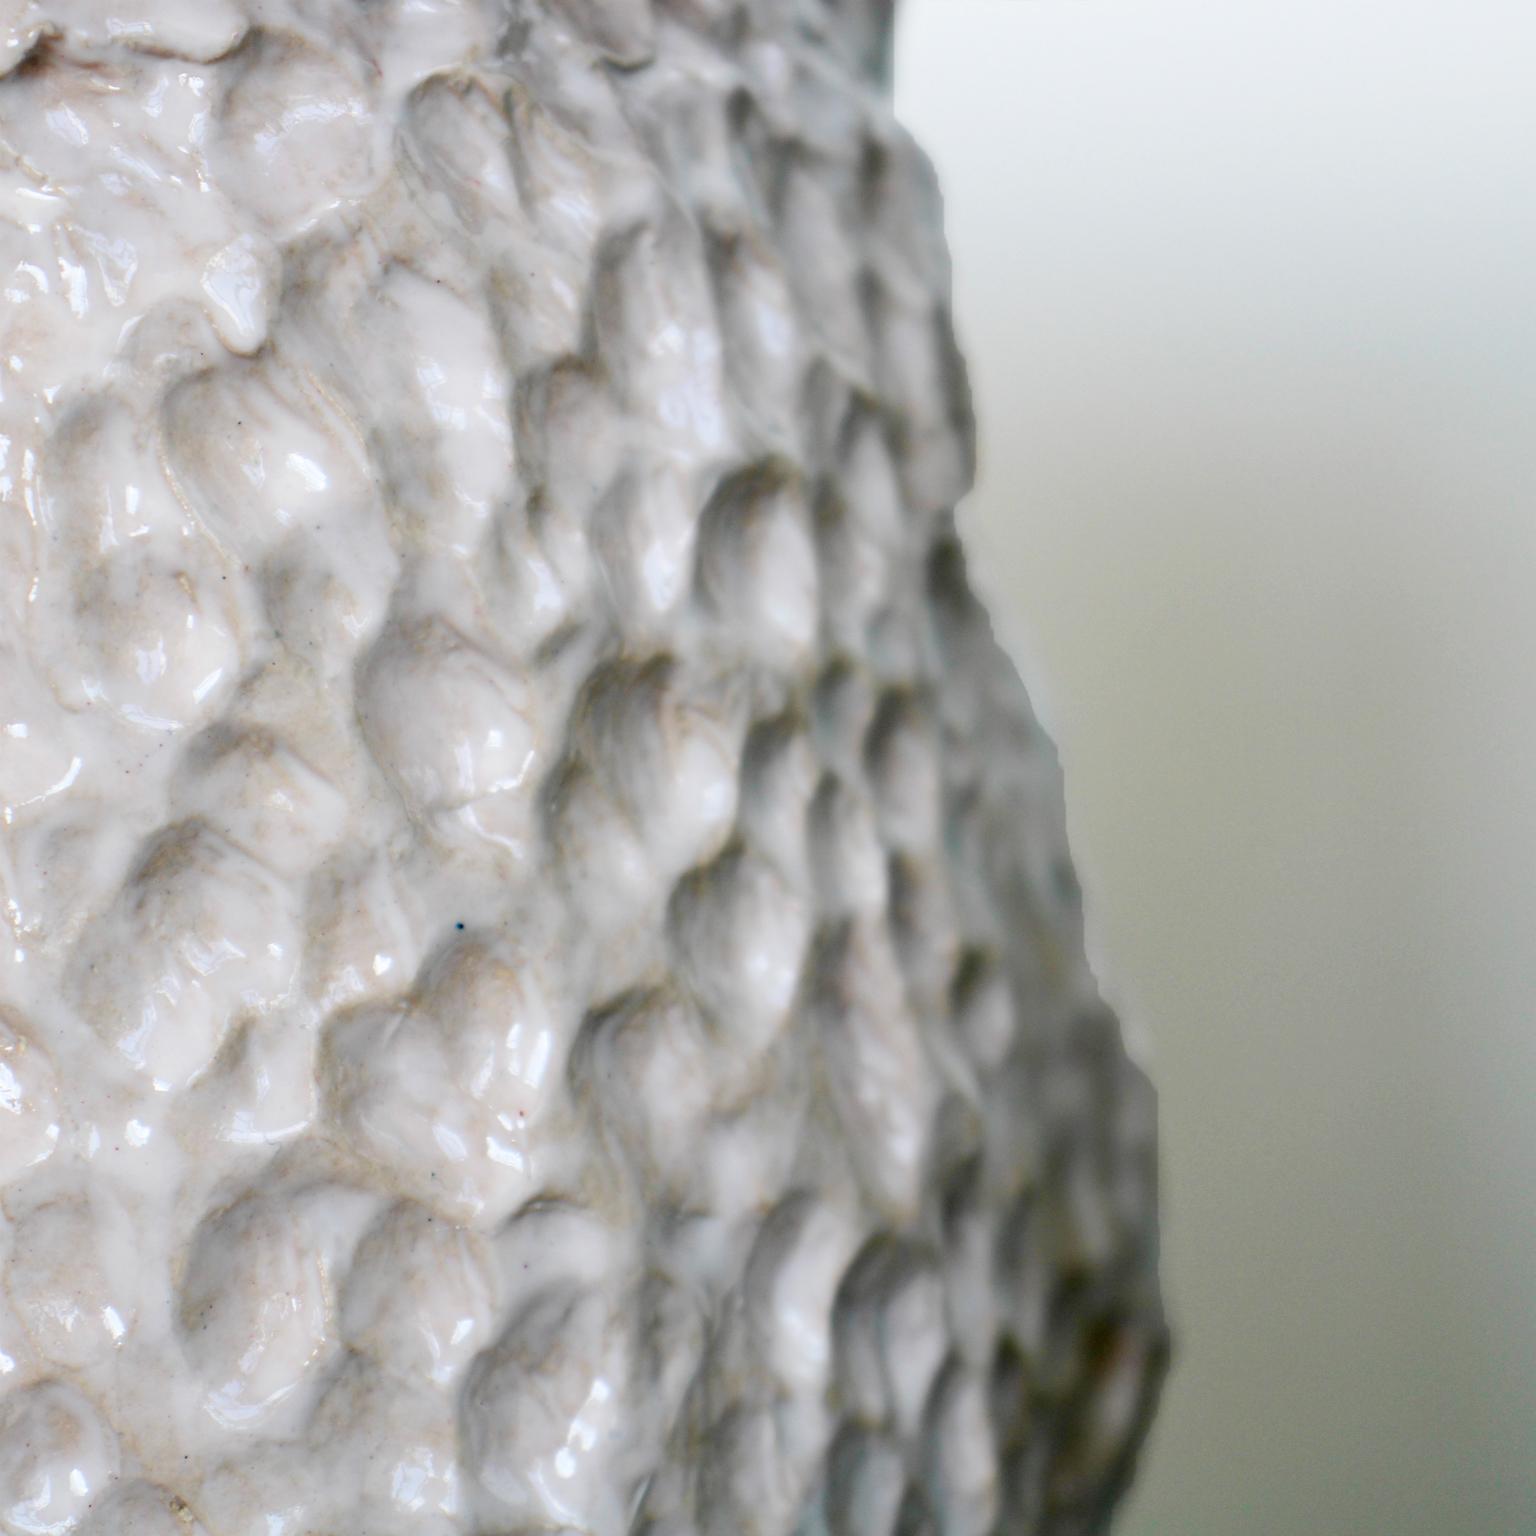 Hand-Crafted Contemporary Ceramic Furniture, Stool, 2020, Rutger de Regt, the Netherlands